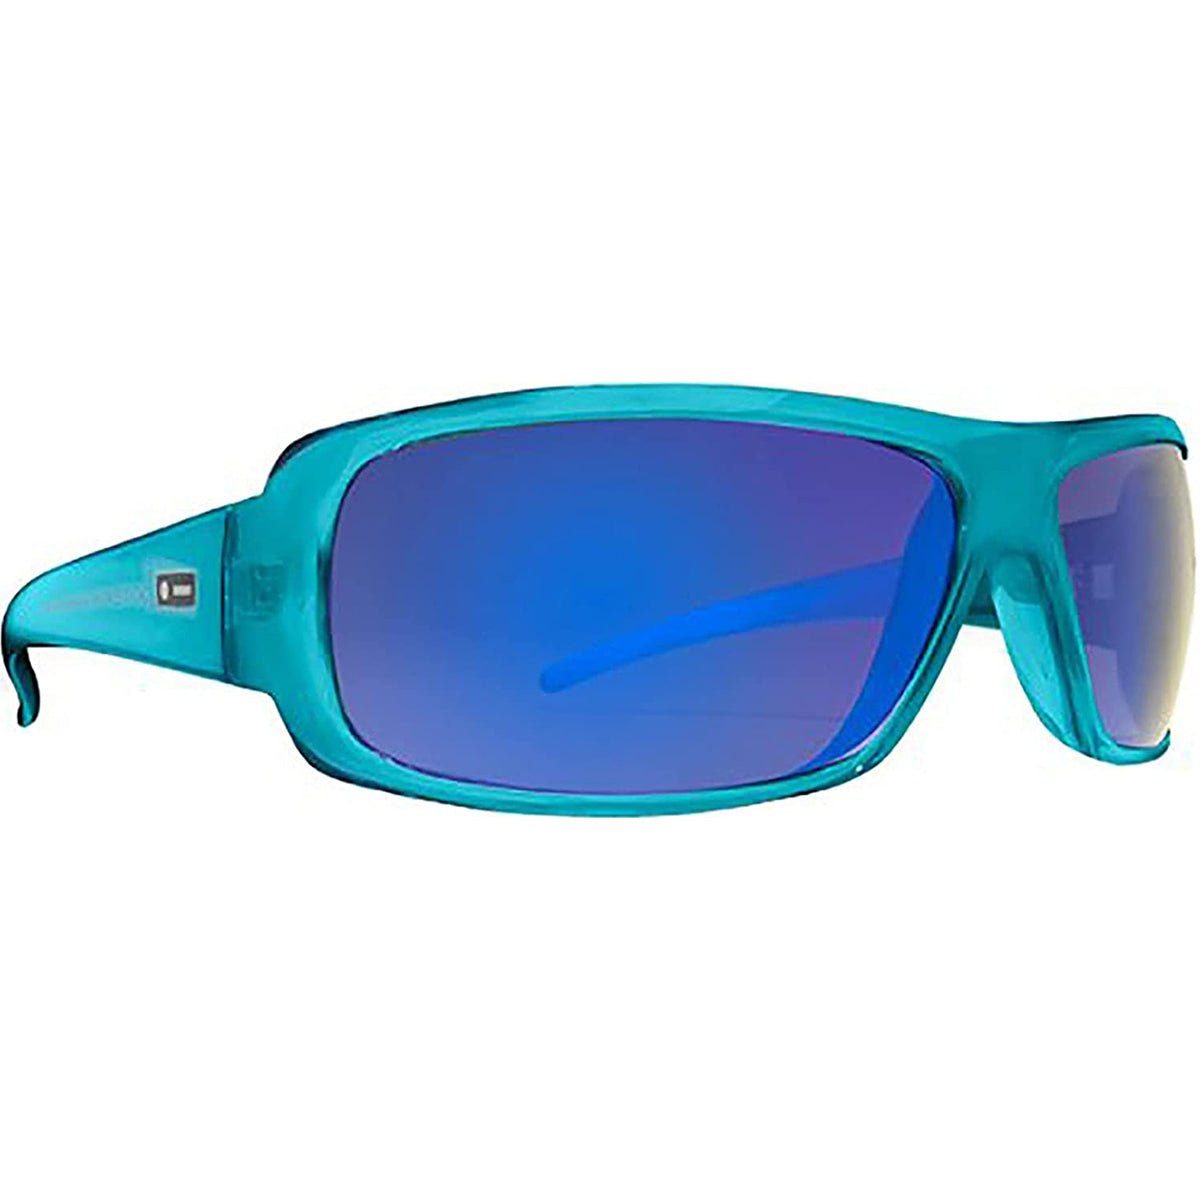 Dot Dash Catalyst Men's Sports Polarized Sunglasses